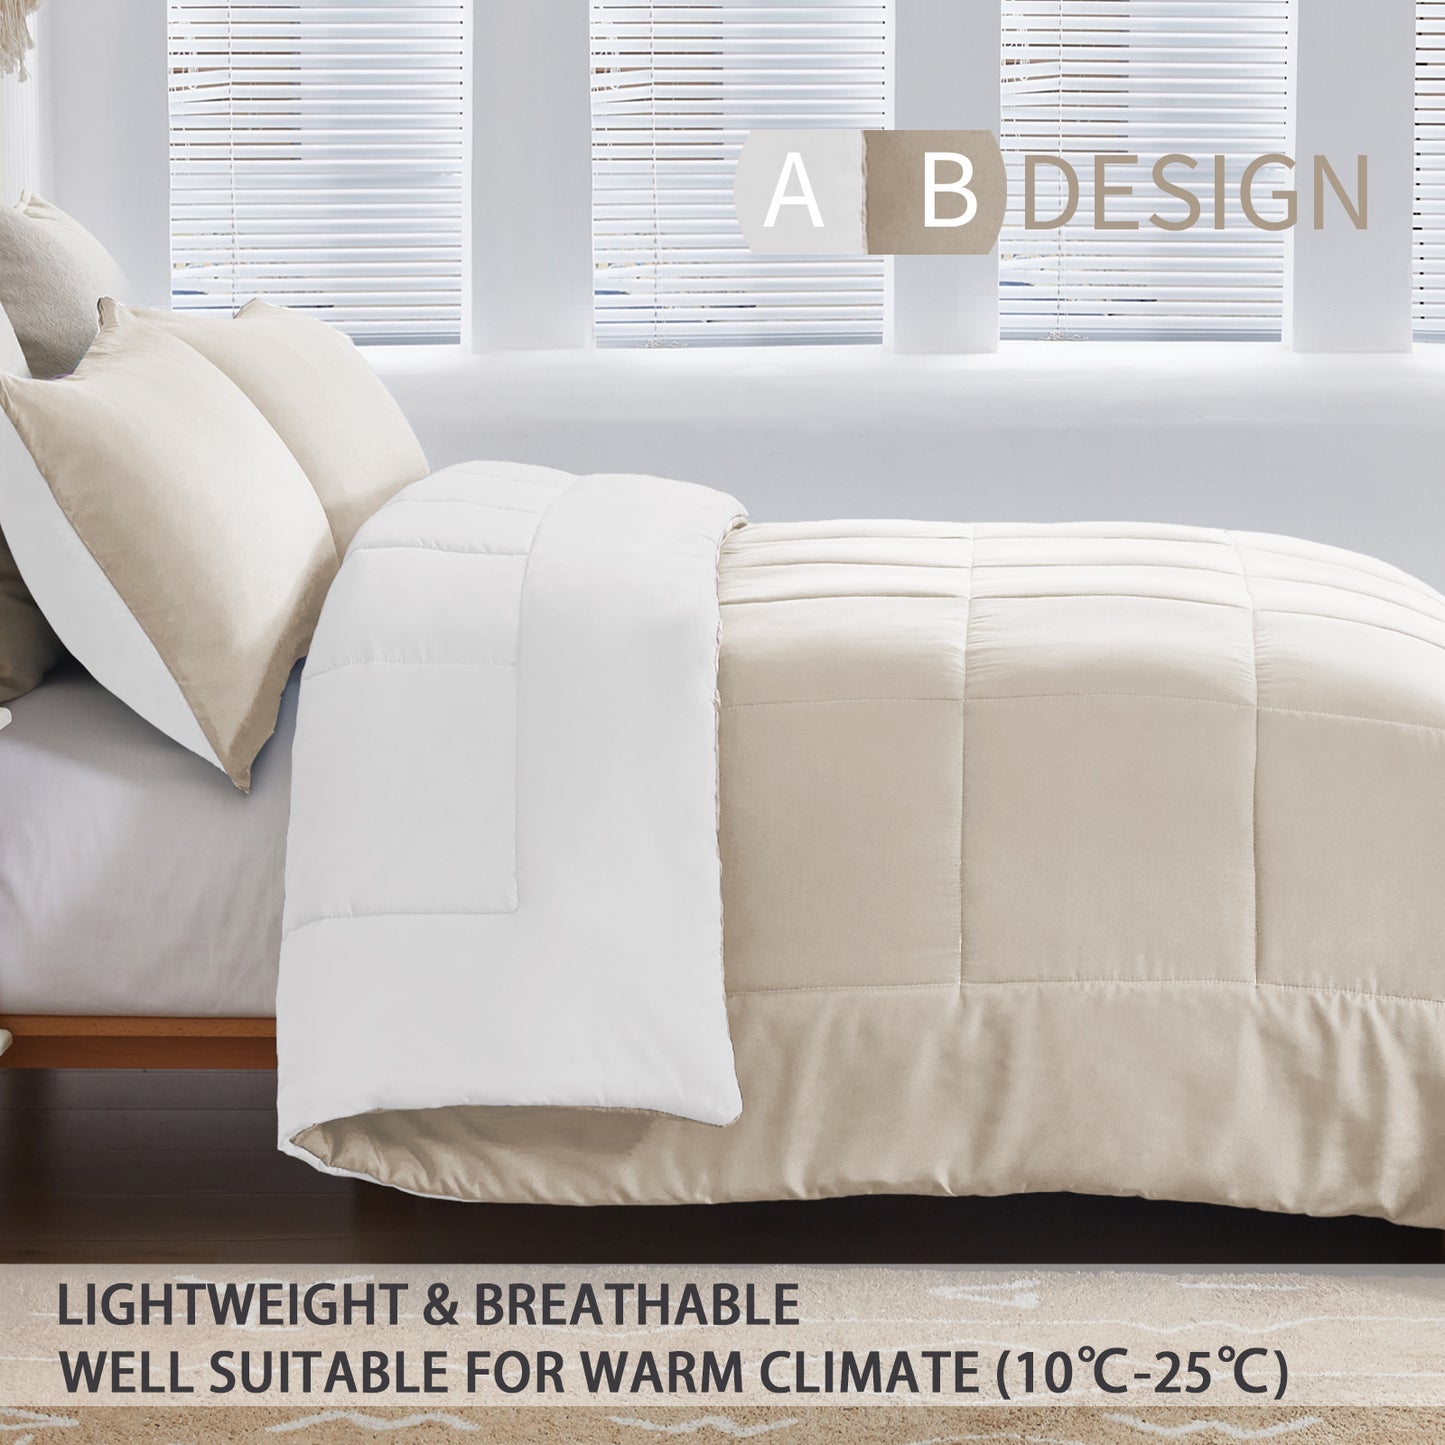 Exclusivo Mezcla Lightweight Reversible 3-Piece Comforter Set All Seasons, Down Alternative Comforter with 2 Pillow Shams, Queen Size, Beige/White